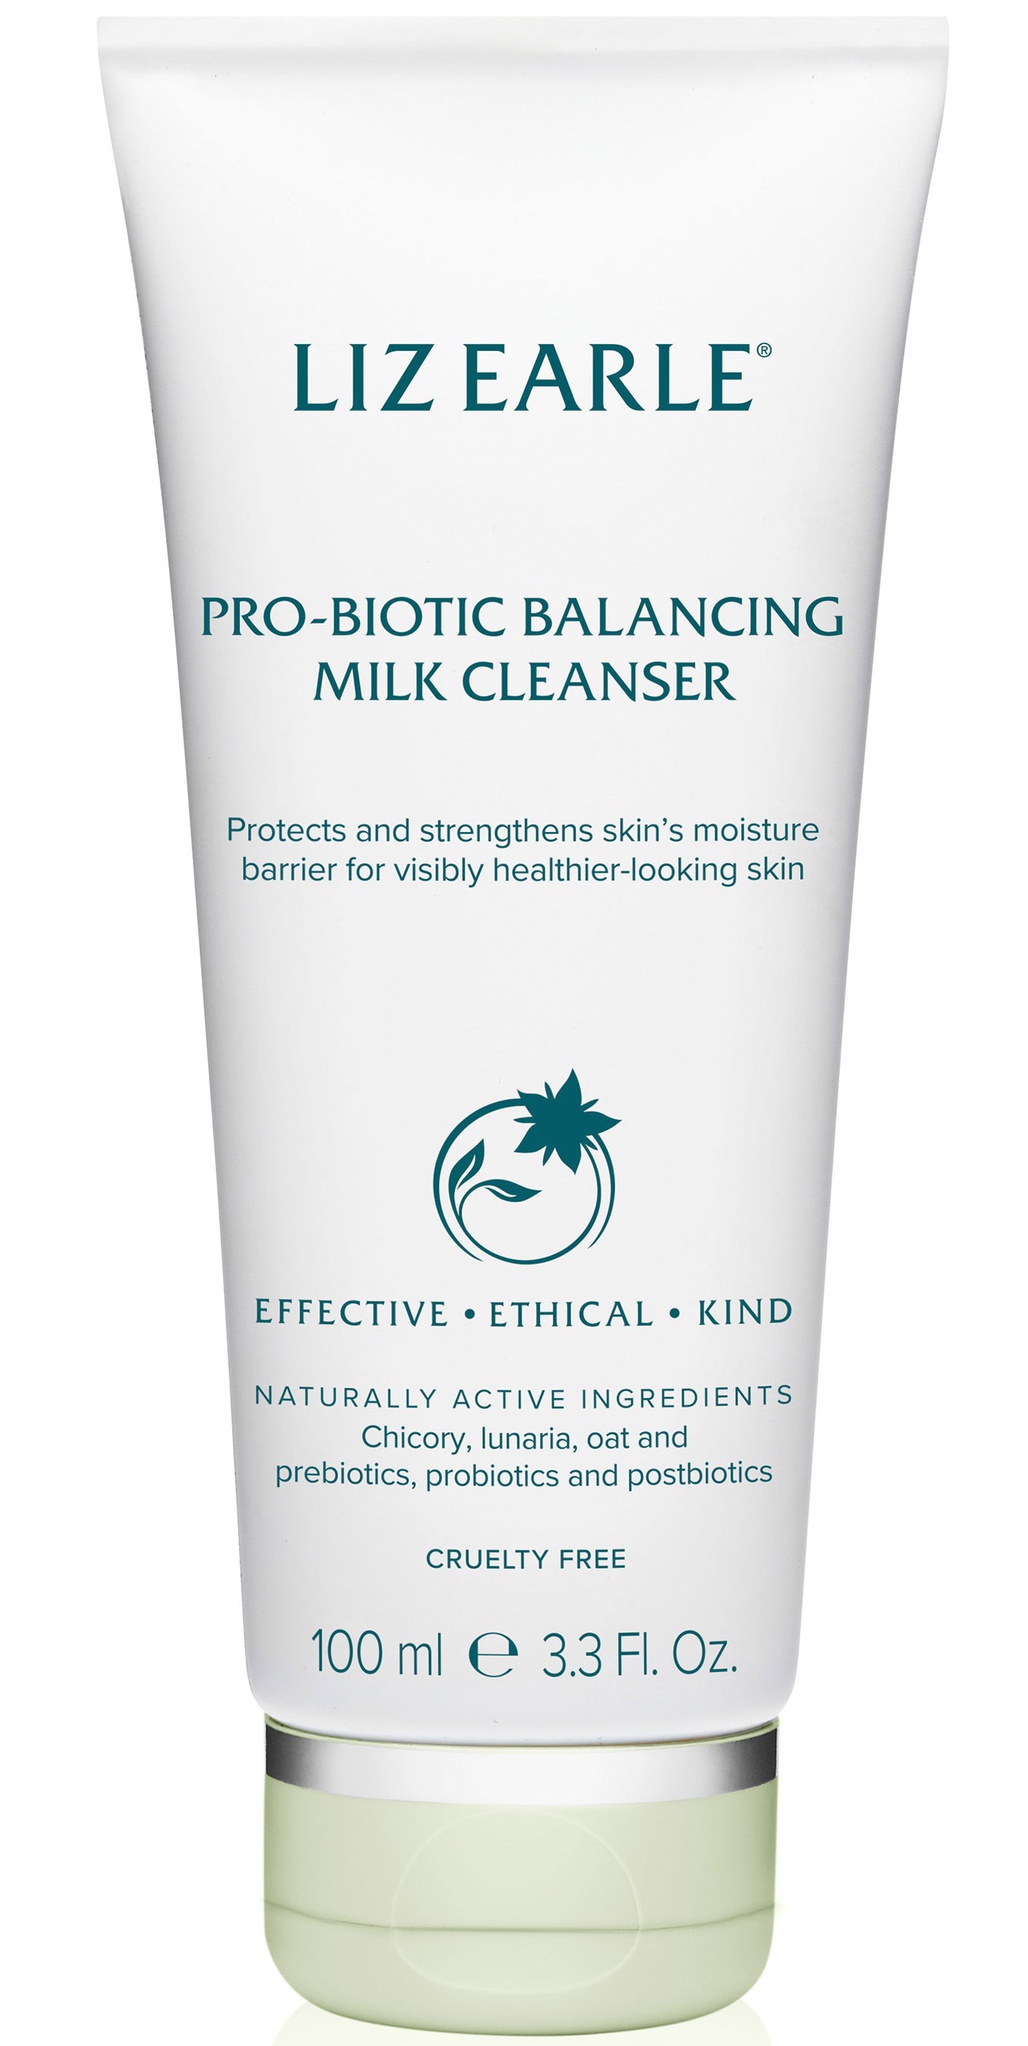 Liz Earle Pro-biotic Balancing Milk Cleanser